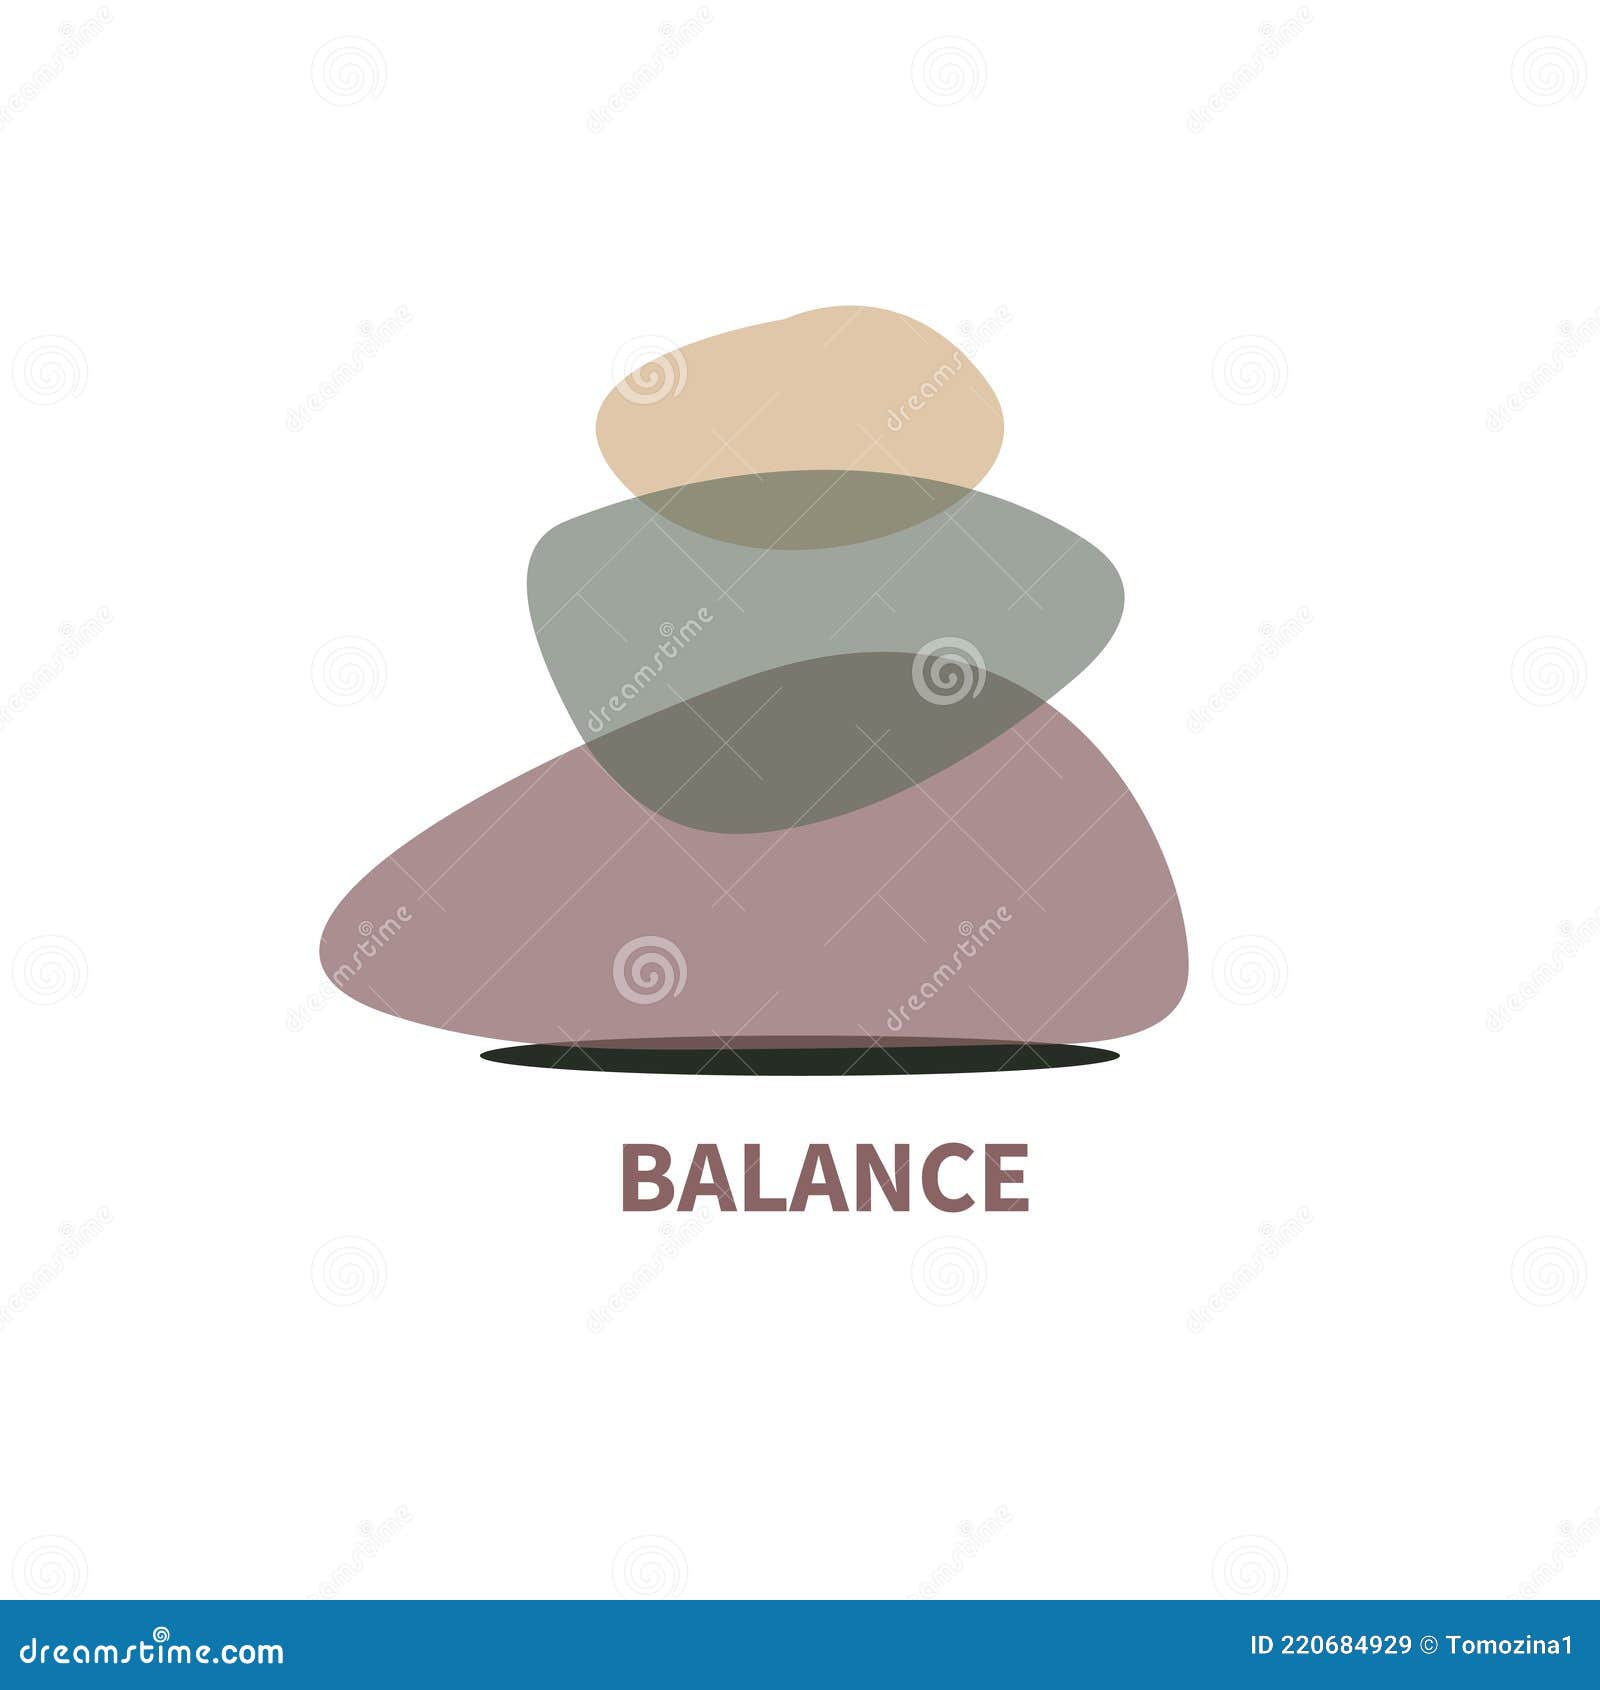 Balance Icon. Harmony Symbol. of Buddhism Concept Stock Vector - Illustration of graphic, 220684929